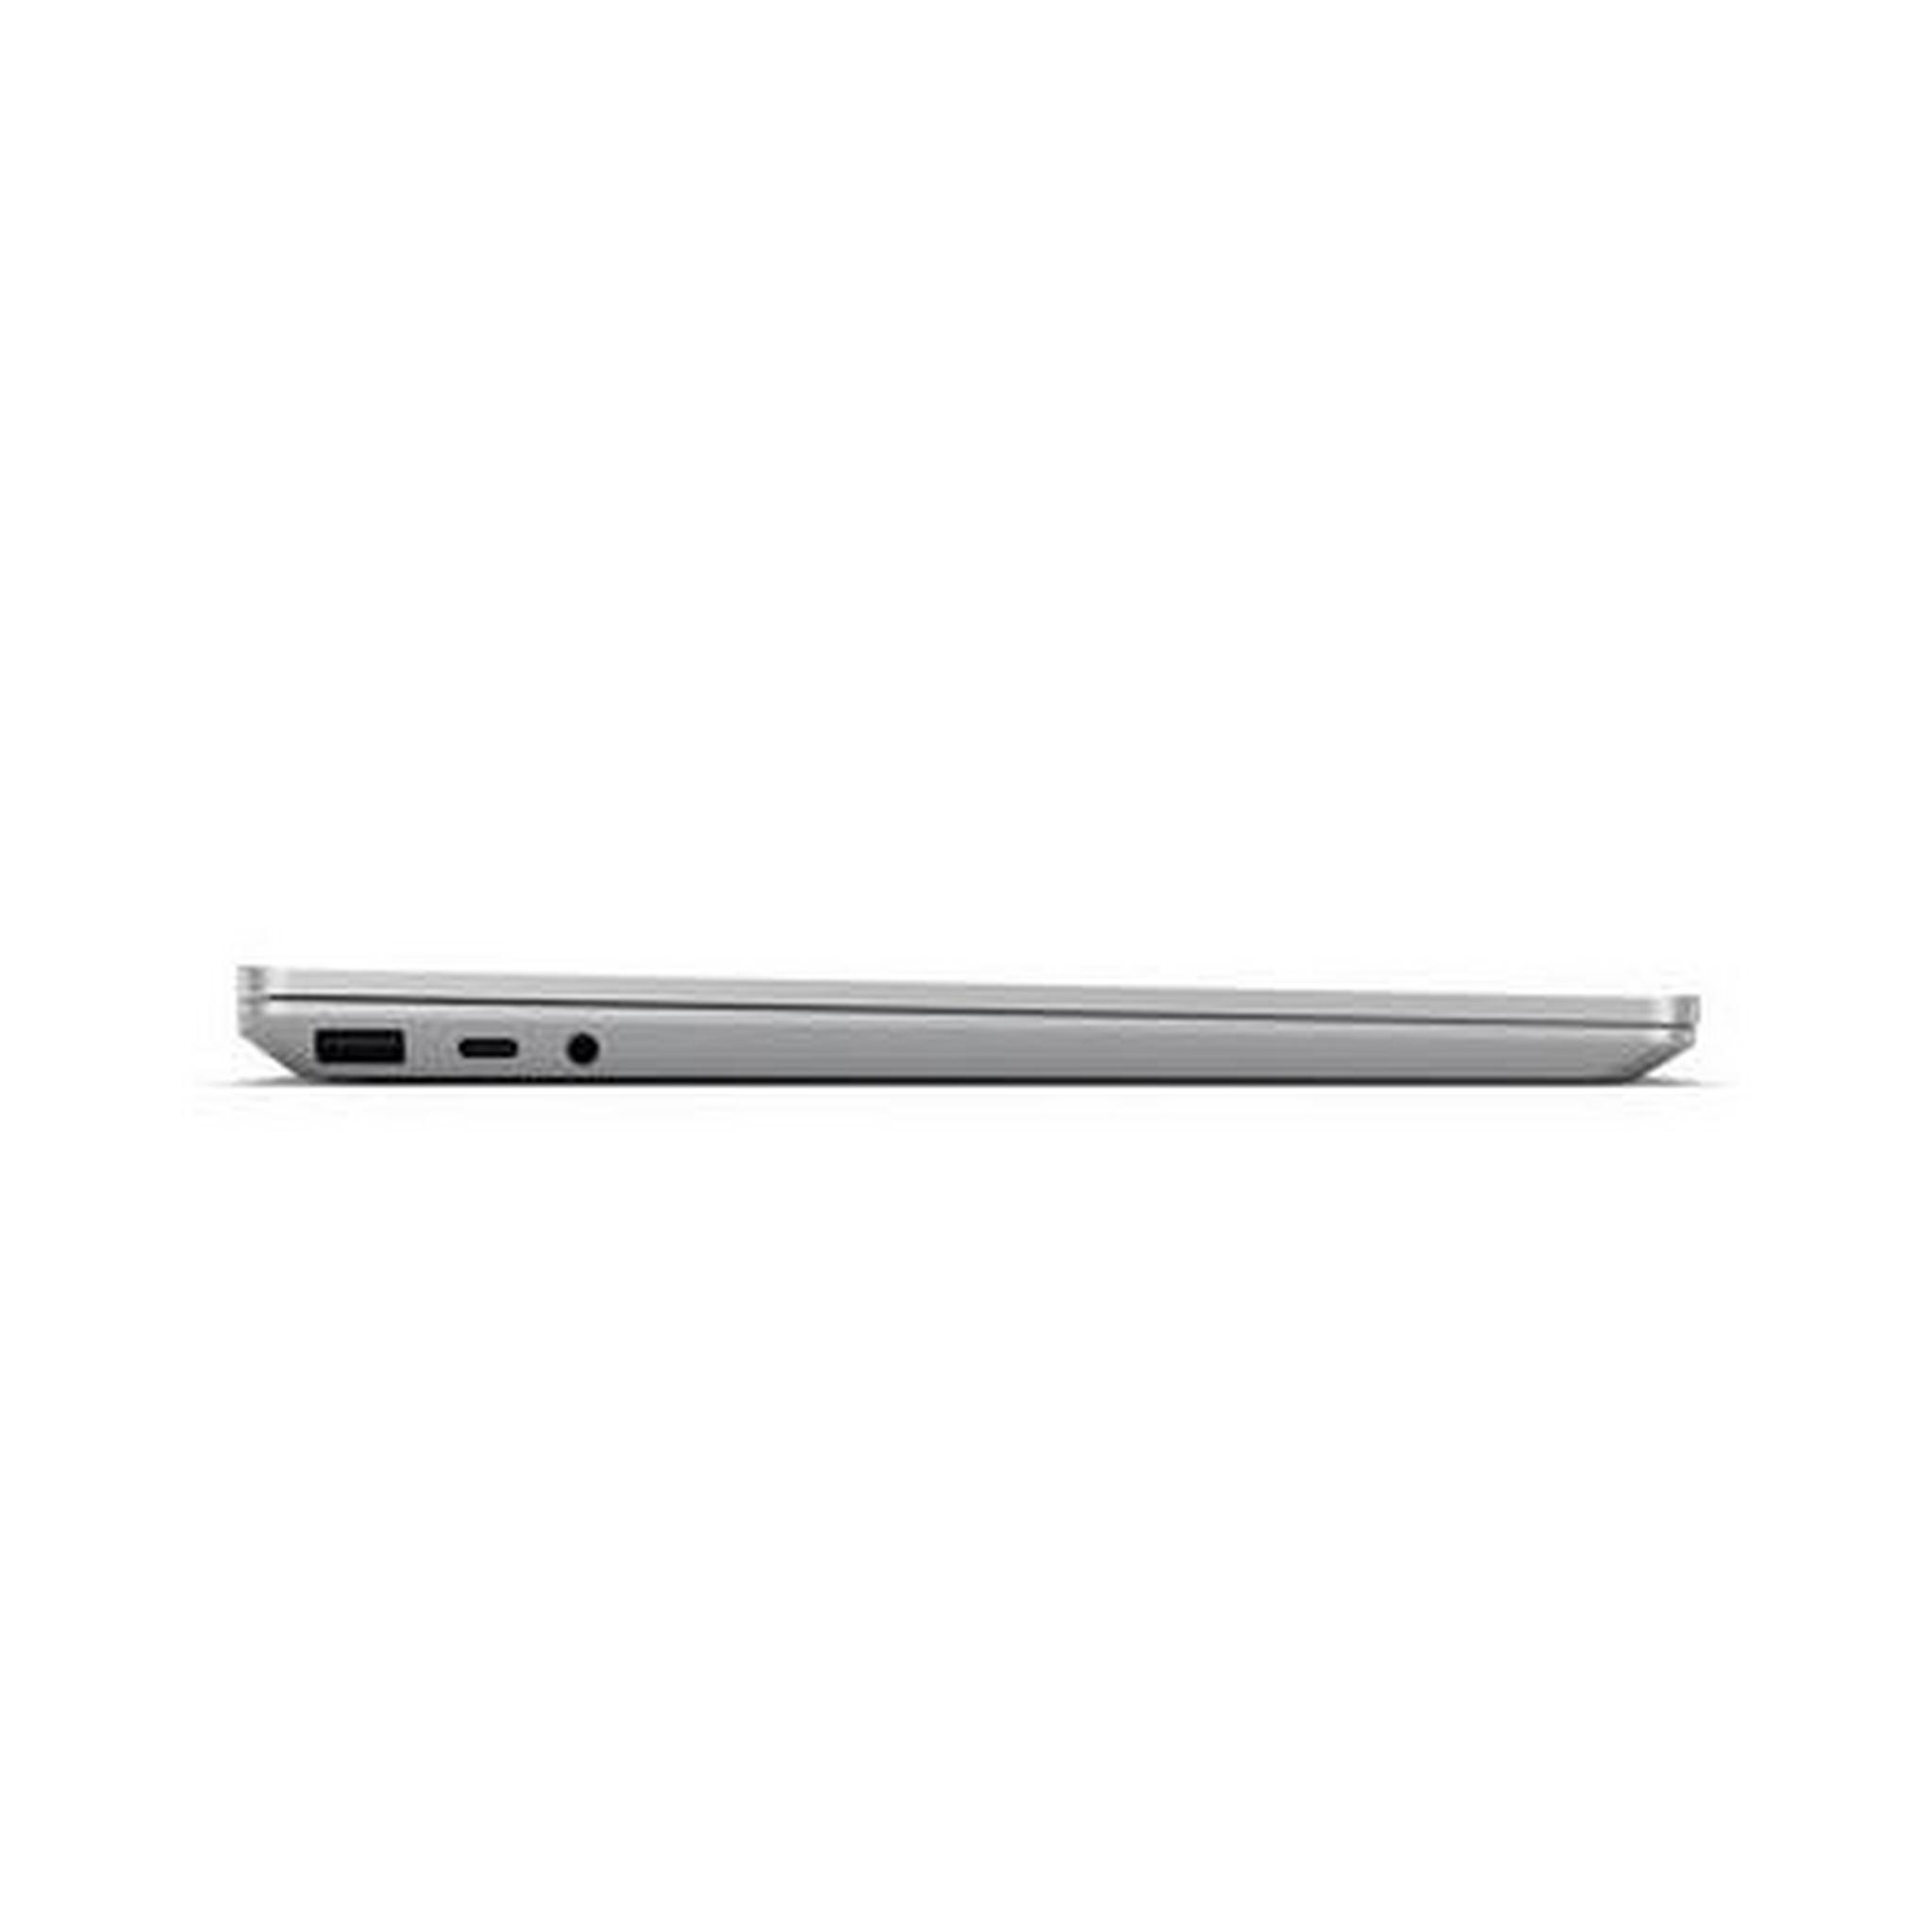 Microsoft Surface Laptop Go Intel core i5 RAM 8GB 128GB SSD Laptop - Platinum